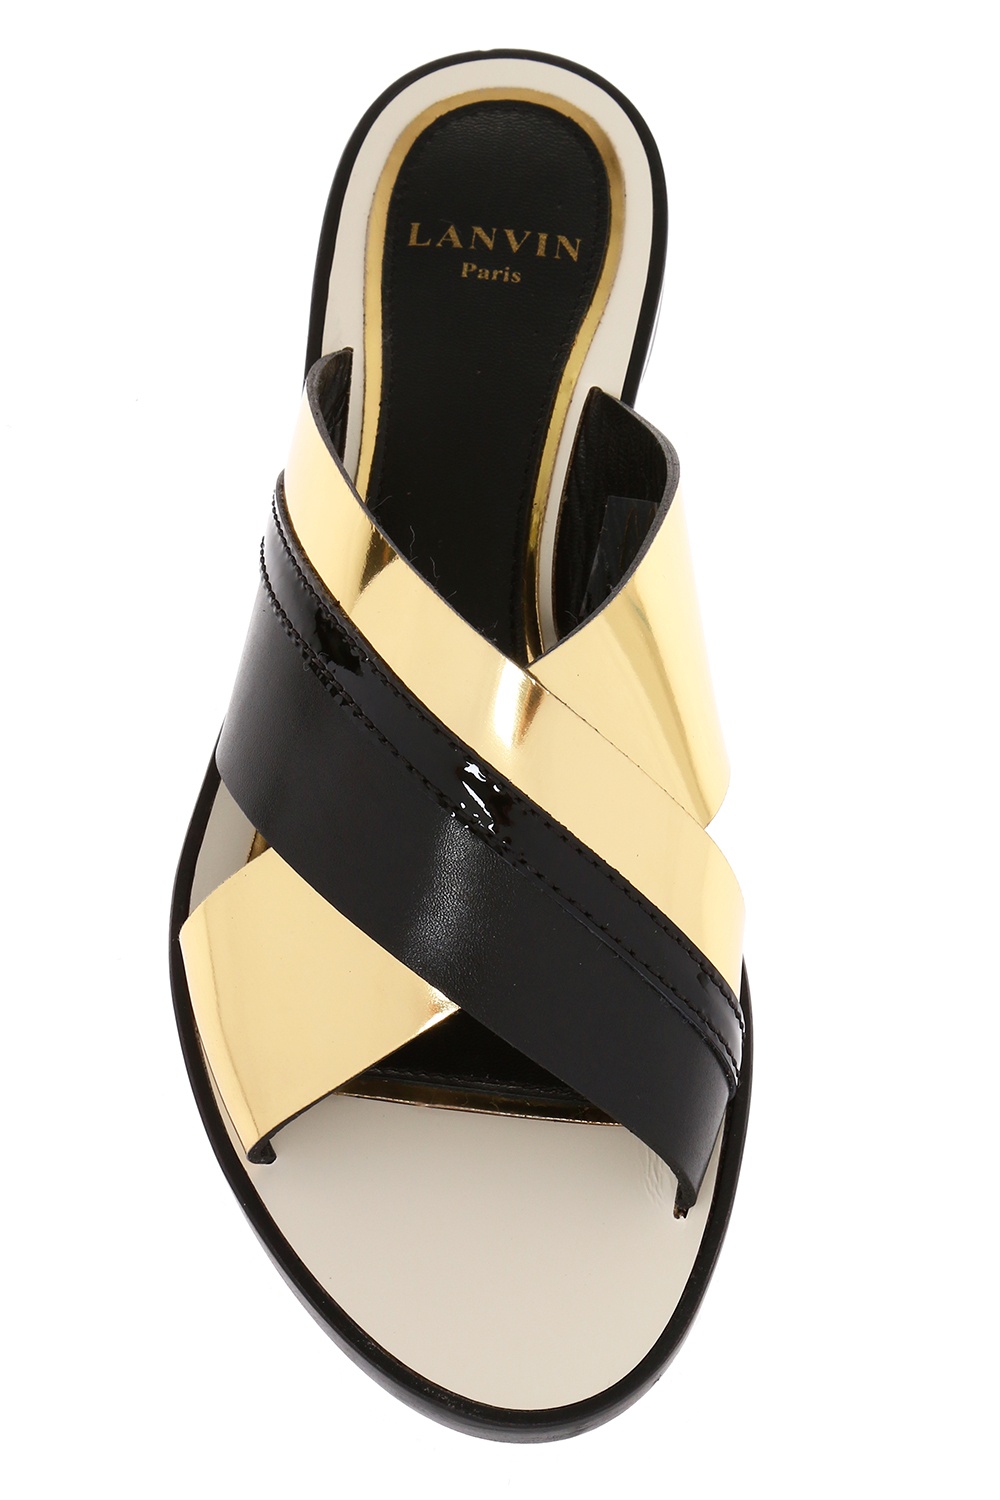 plast Sobriquette halvkugle Gold Leather slippers Lanvin - Vitkac HK